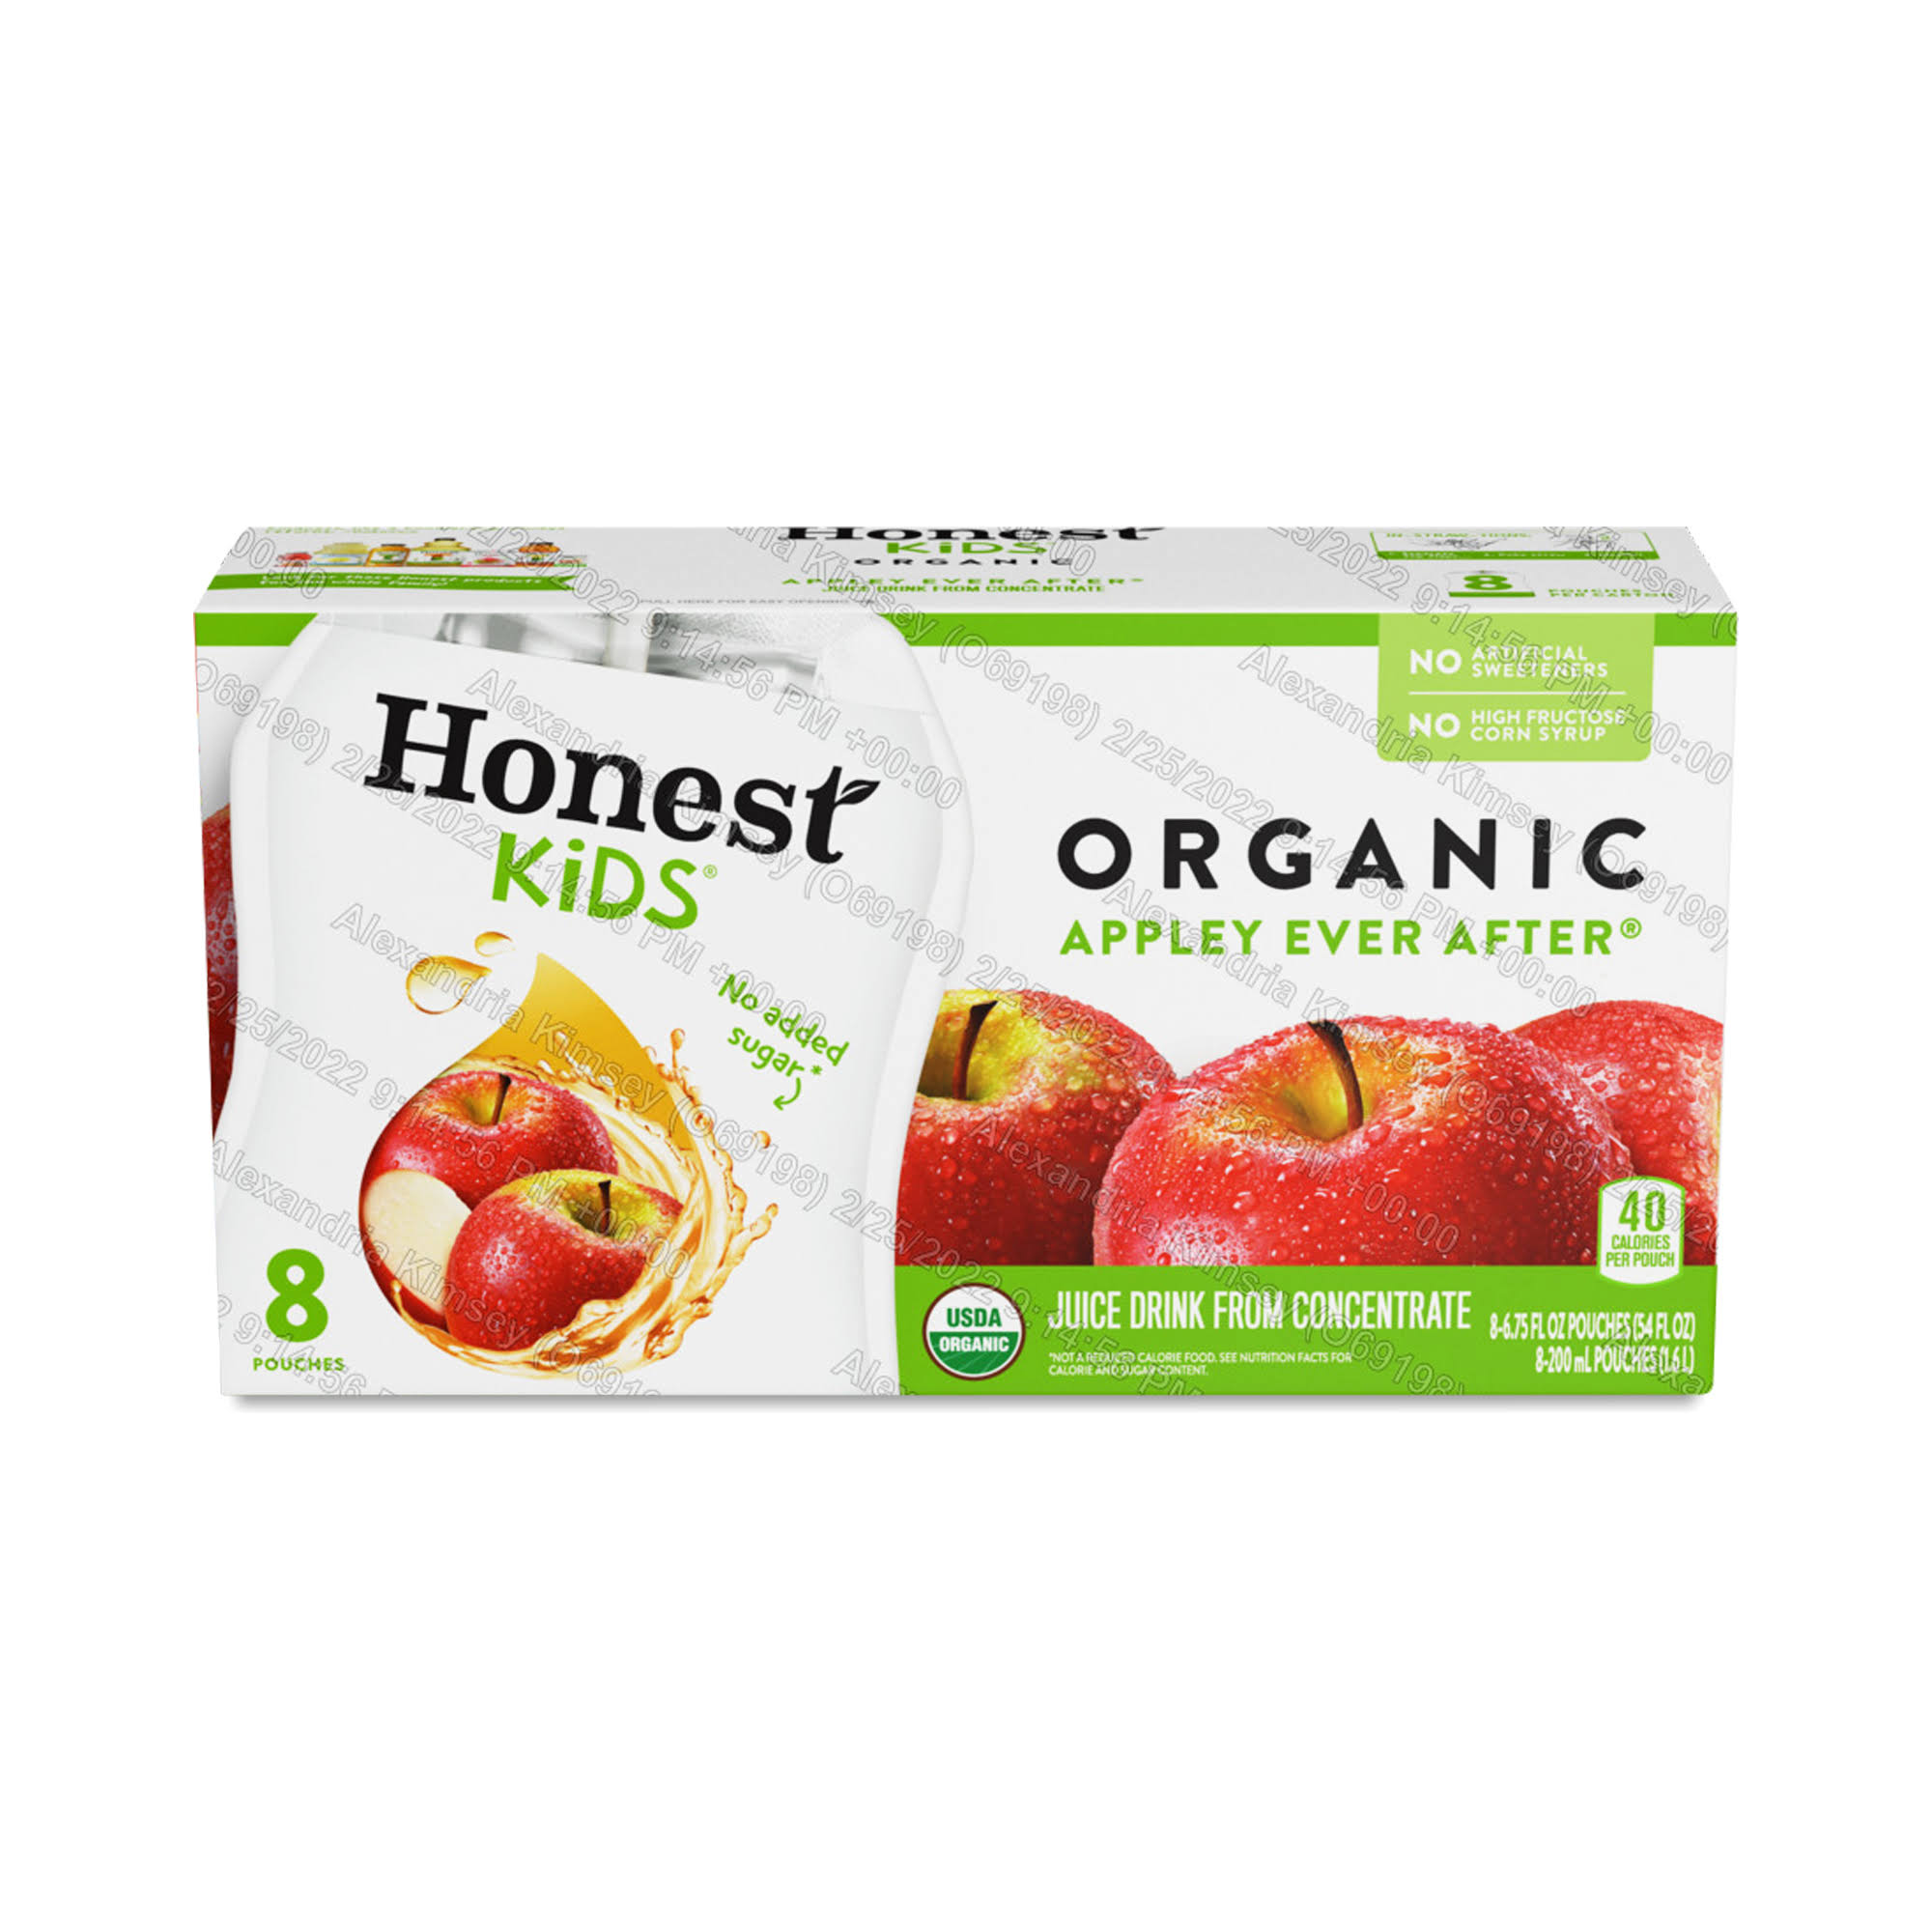 Honest Kids Appley Ever After Organic Juice Drink - 6.75oz, 8ct